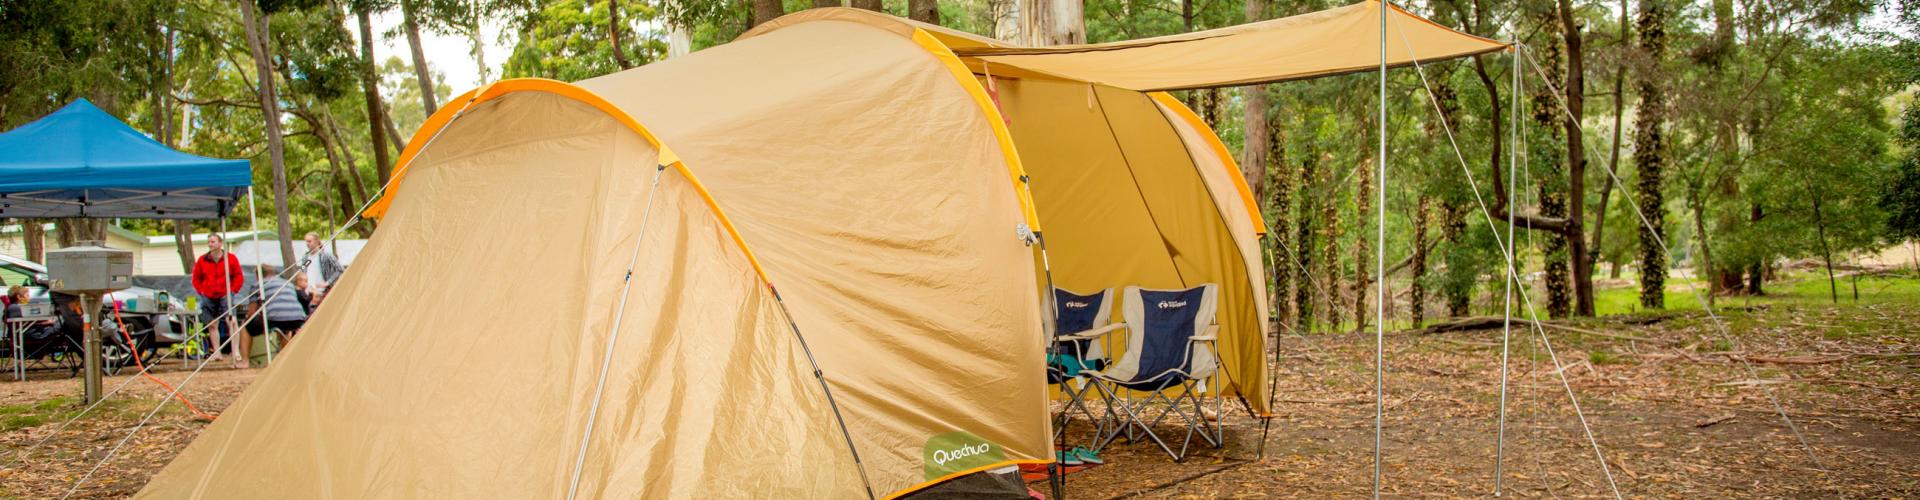 BIG4 Yarra Valley Park Lane Holiday Park - Power Tent and Camper Trailer Sites - Tent Set Up